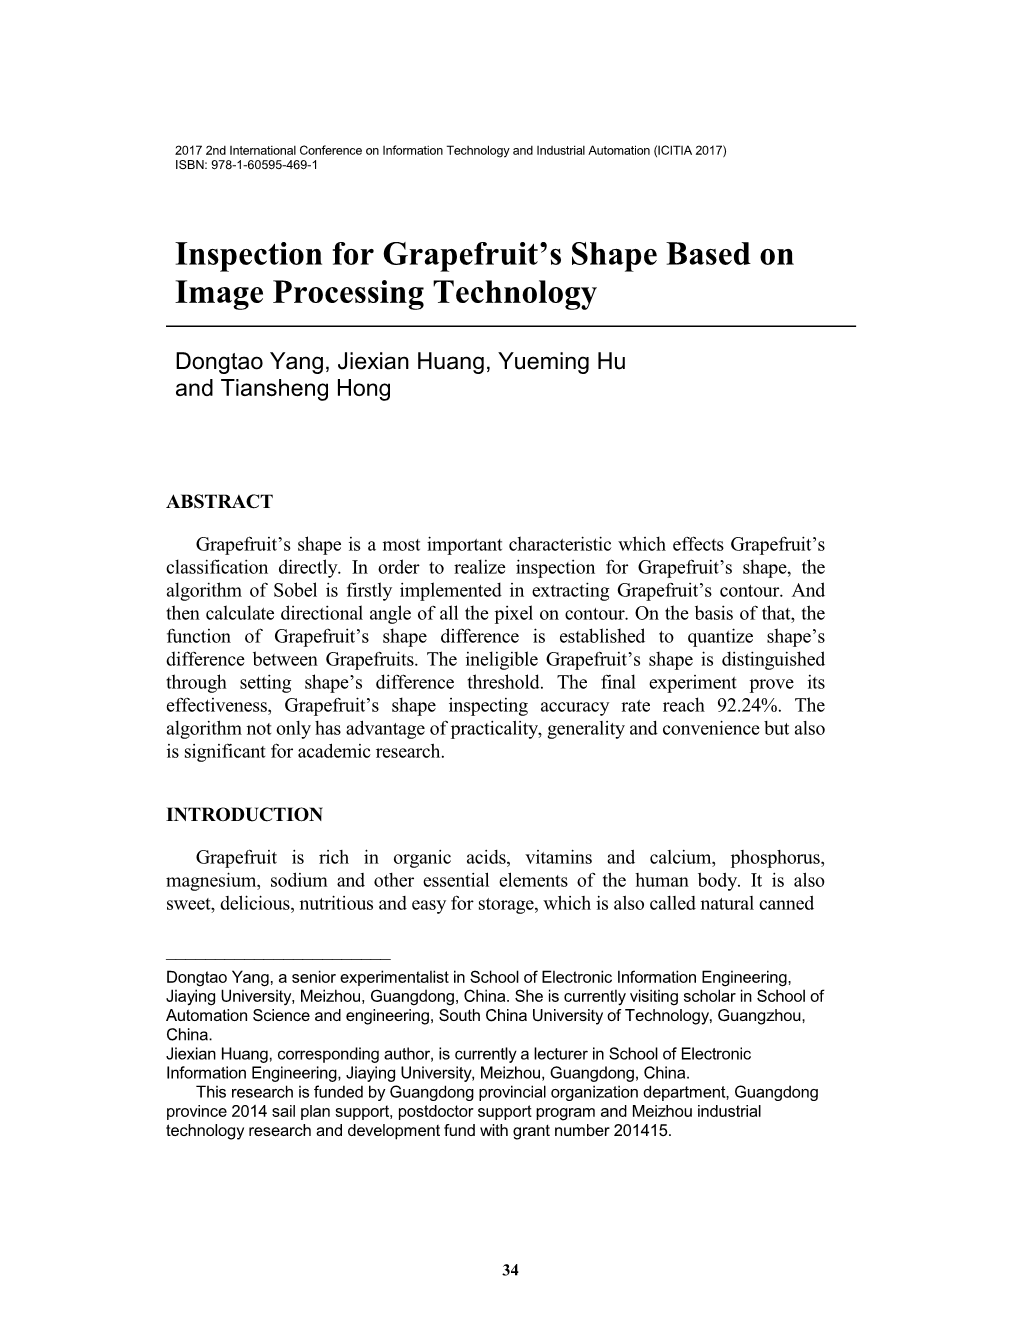 Inspection for Grapefruit's Shape Based on Image Processing Technology